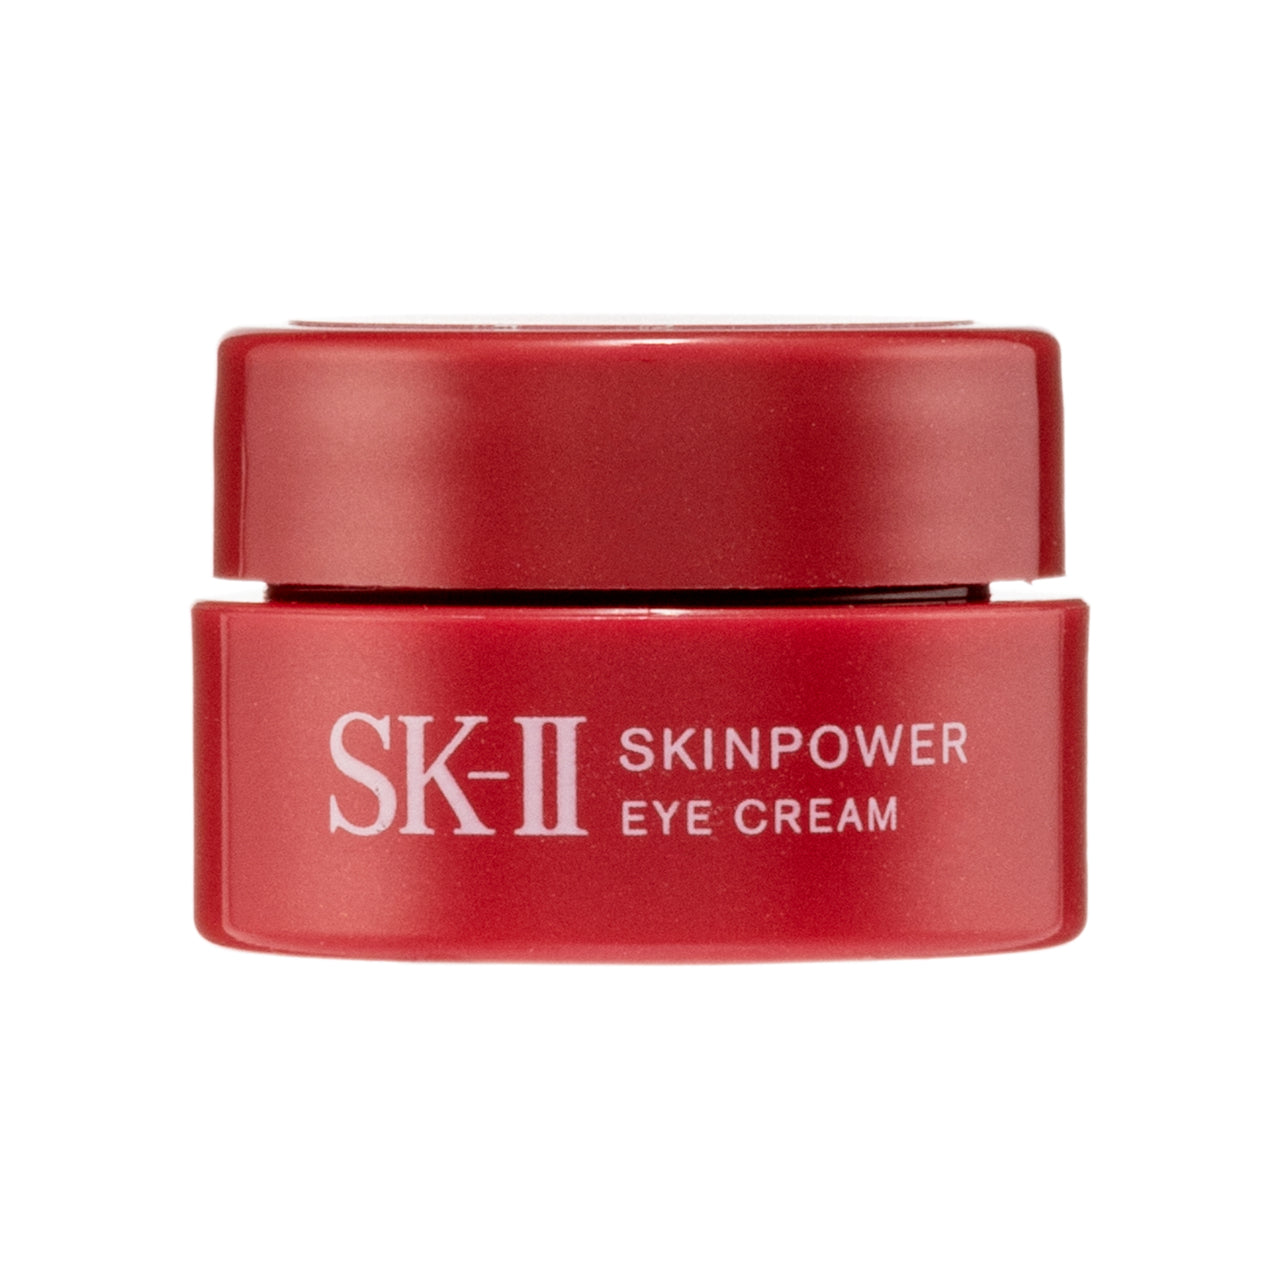 SK-II Skinpower Eye Cream | Sasa Global eShop